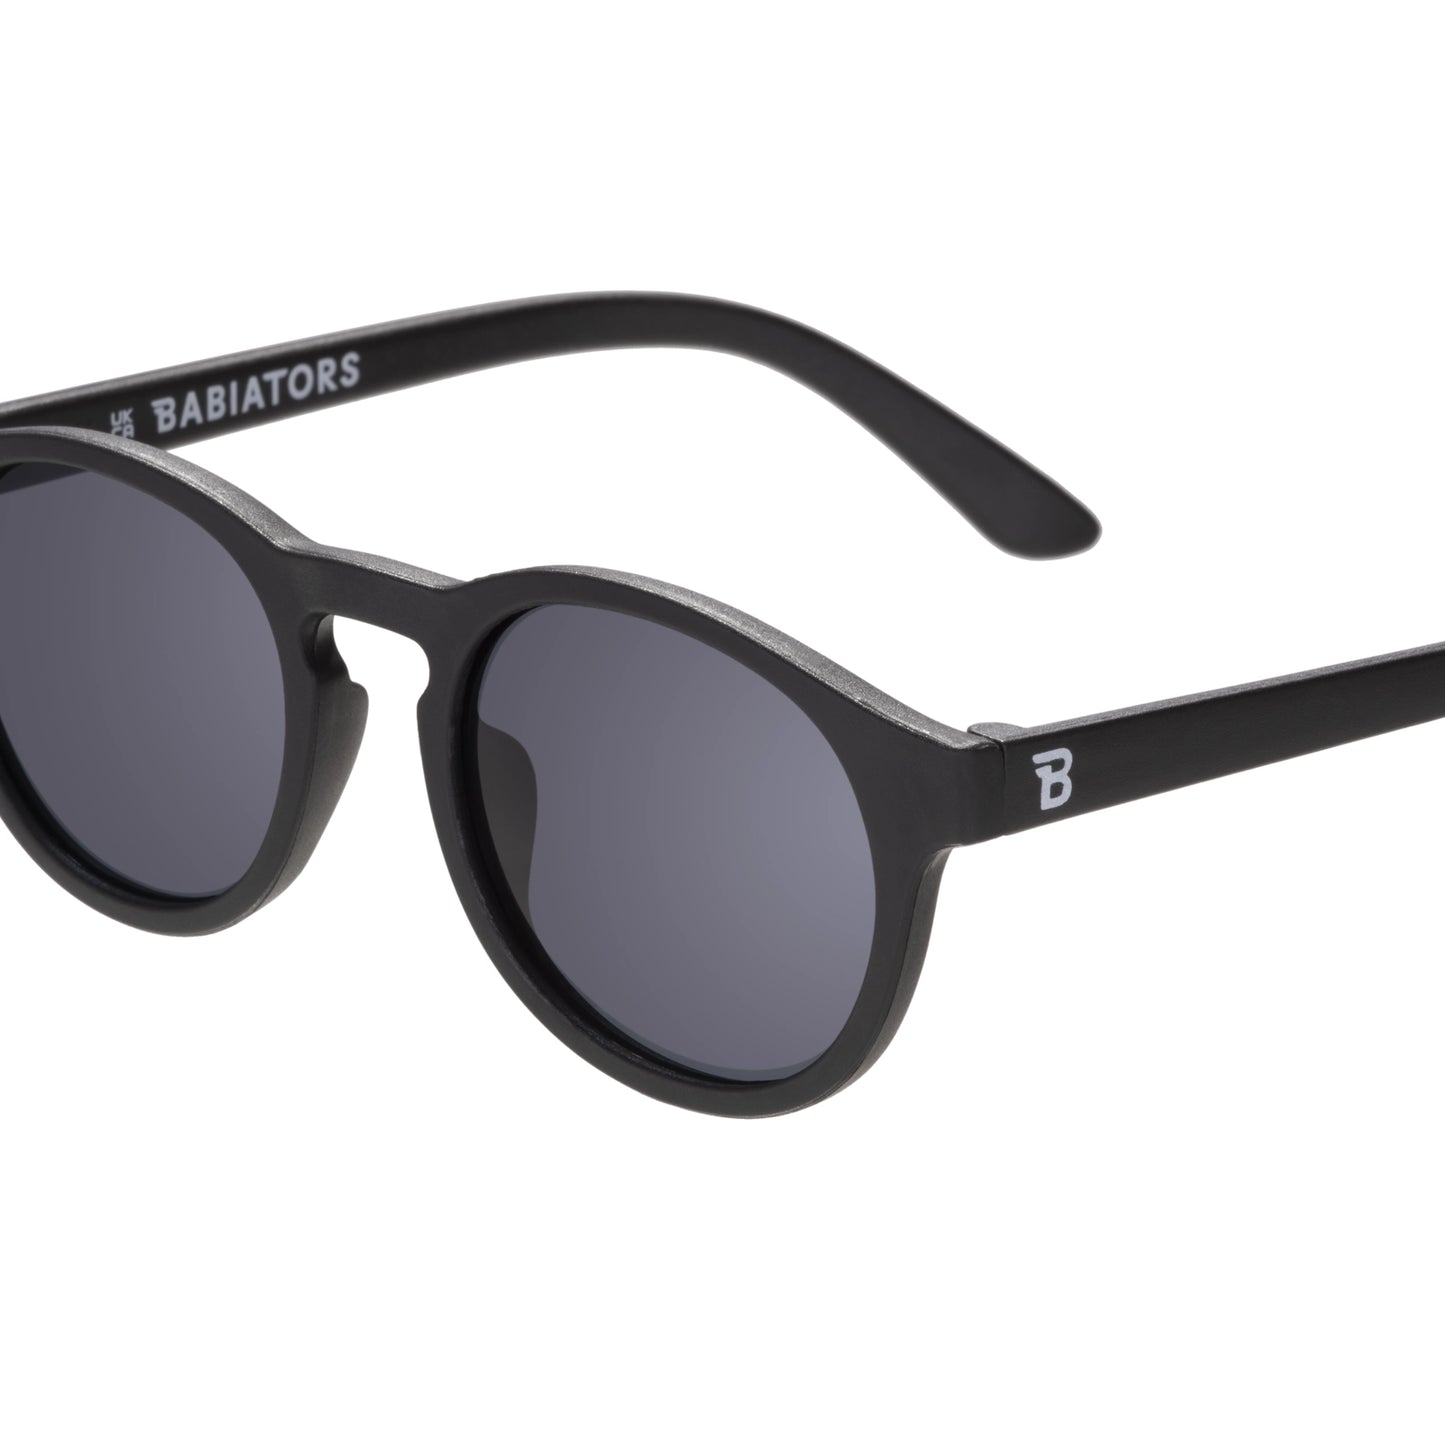 Jet Black Keyhole Sunglasses